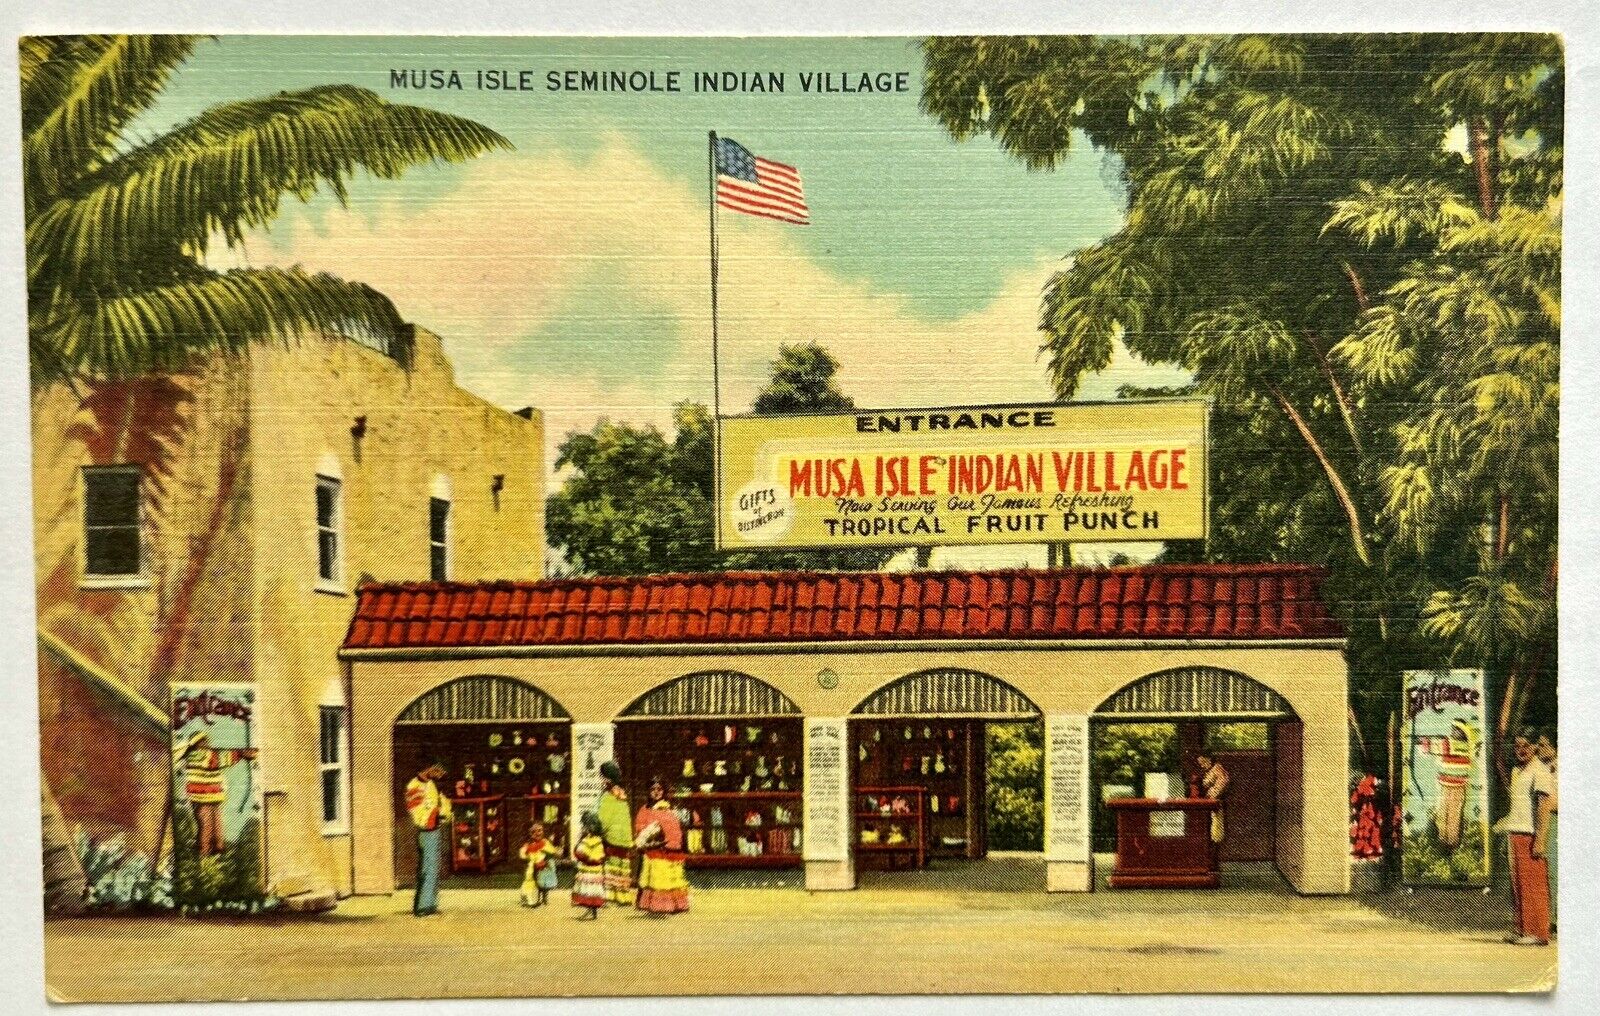 MUSA ISLE SEMINOLE INDIAN VILLAGE Vintage Postcard. Miami Florida